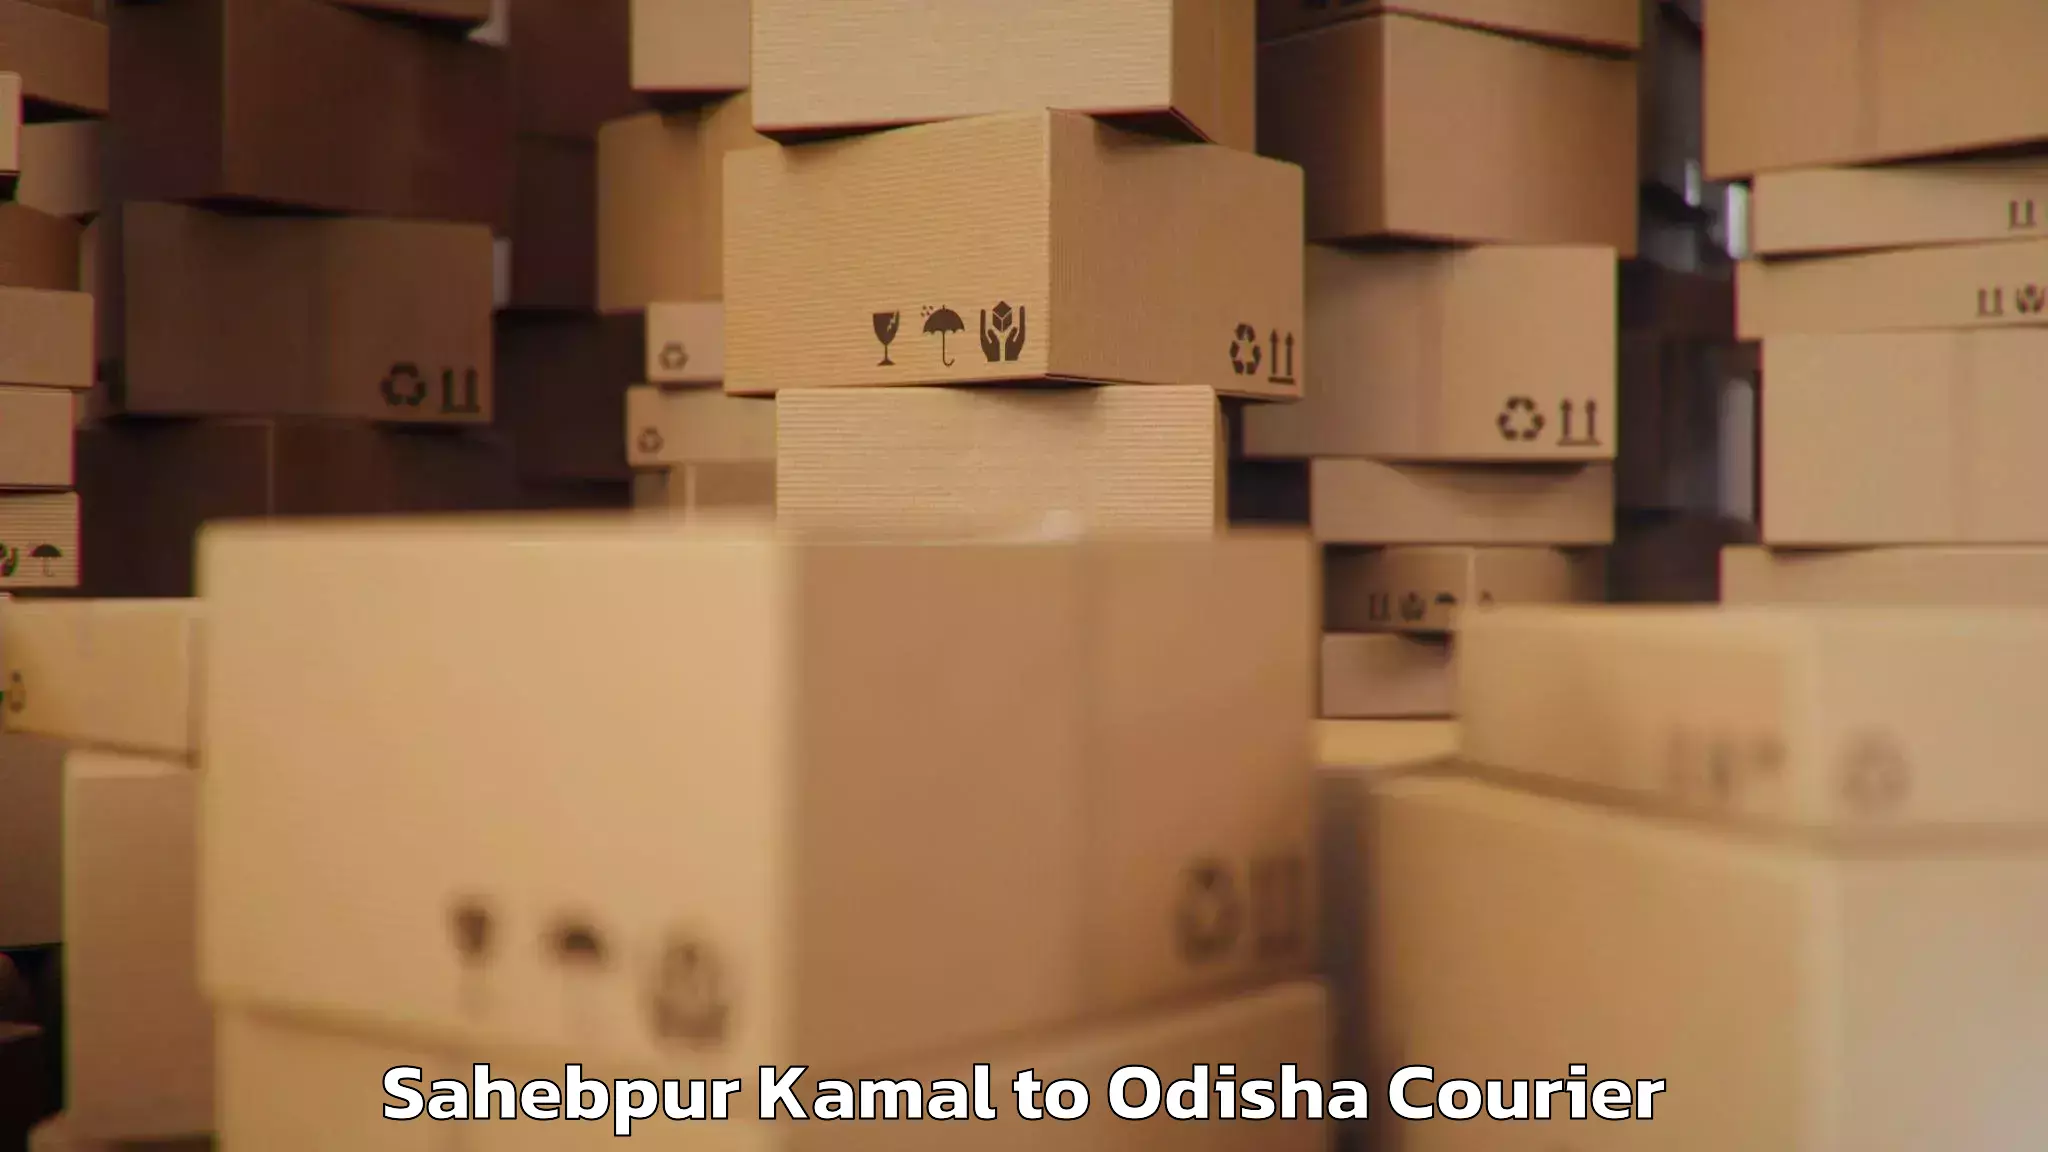 Luggage transport consultancy Sahebpur Kamal to Odisha